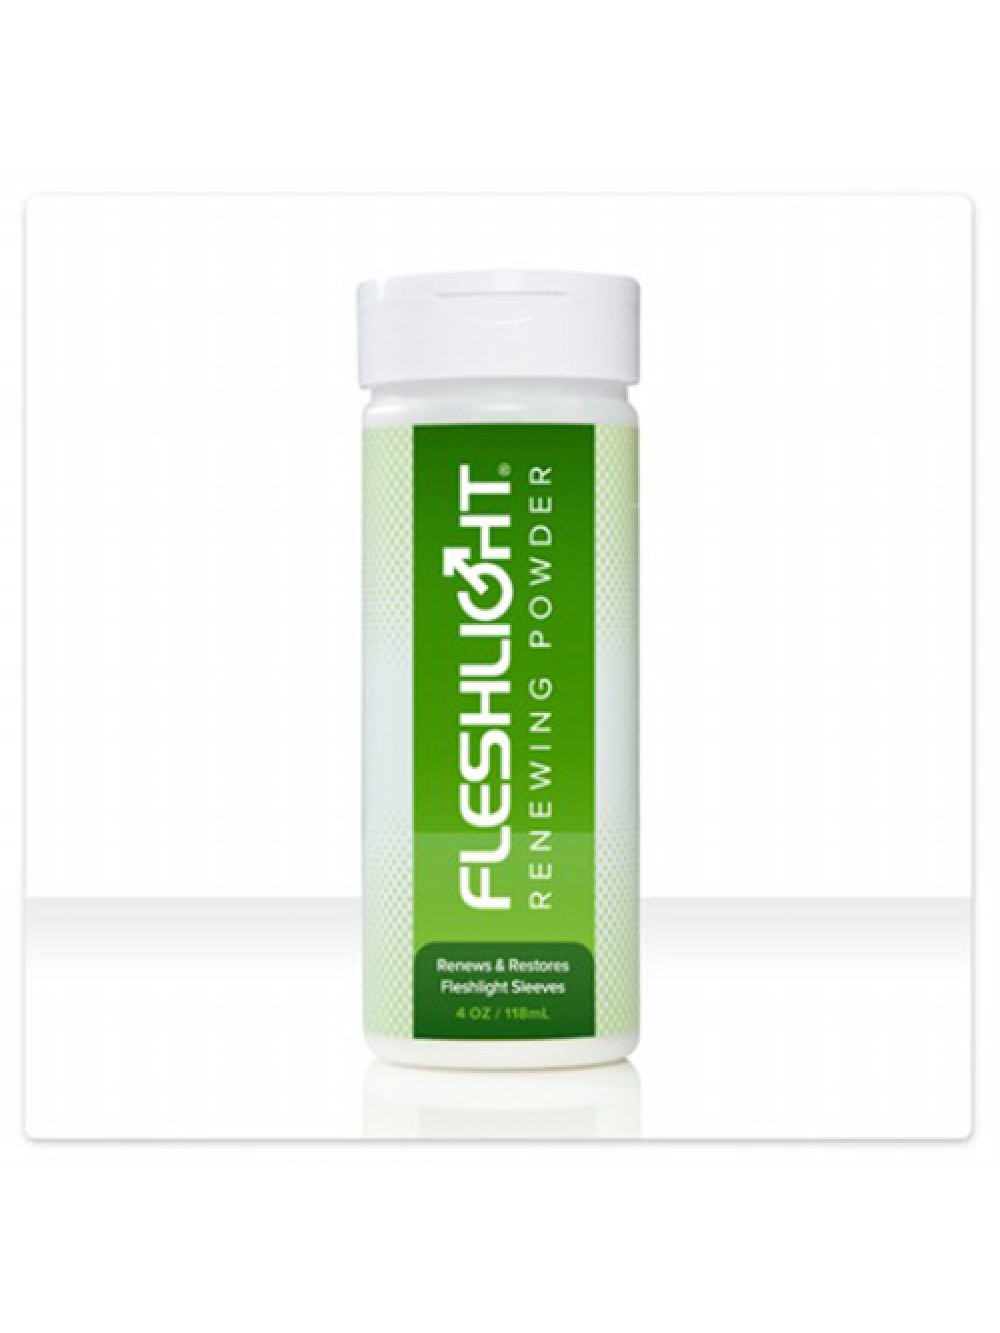 Fleshlight - Renewing Powder 810476016005